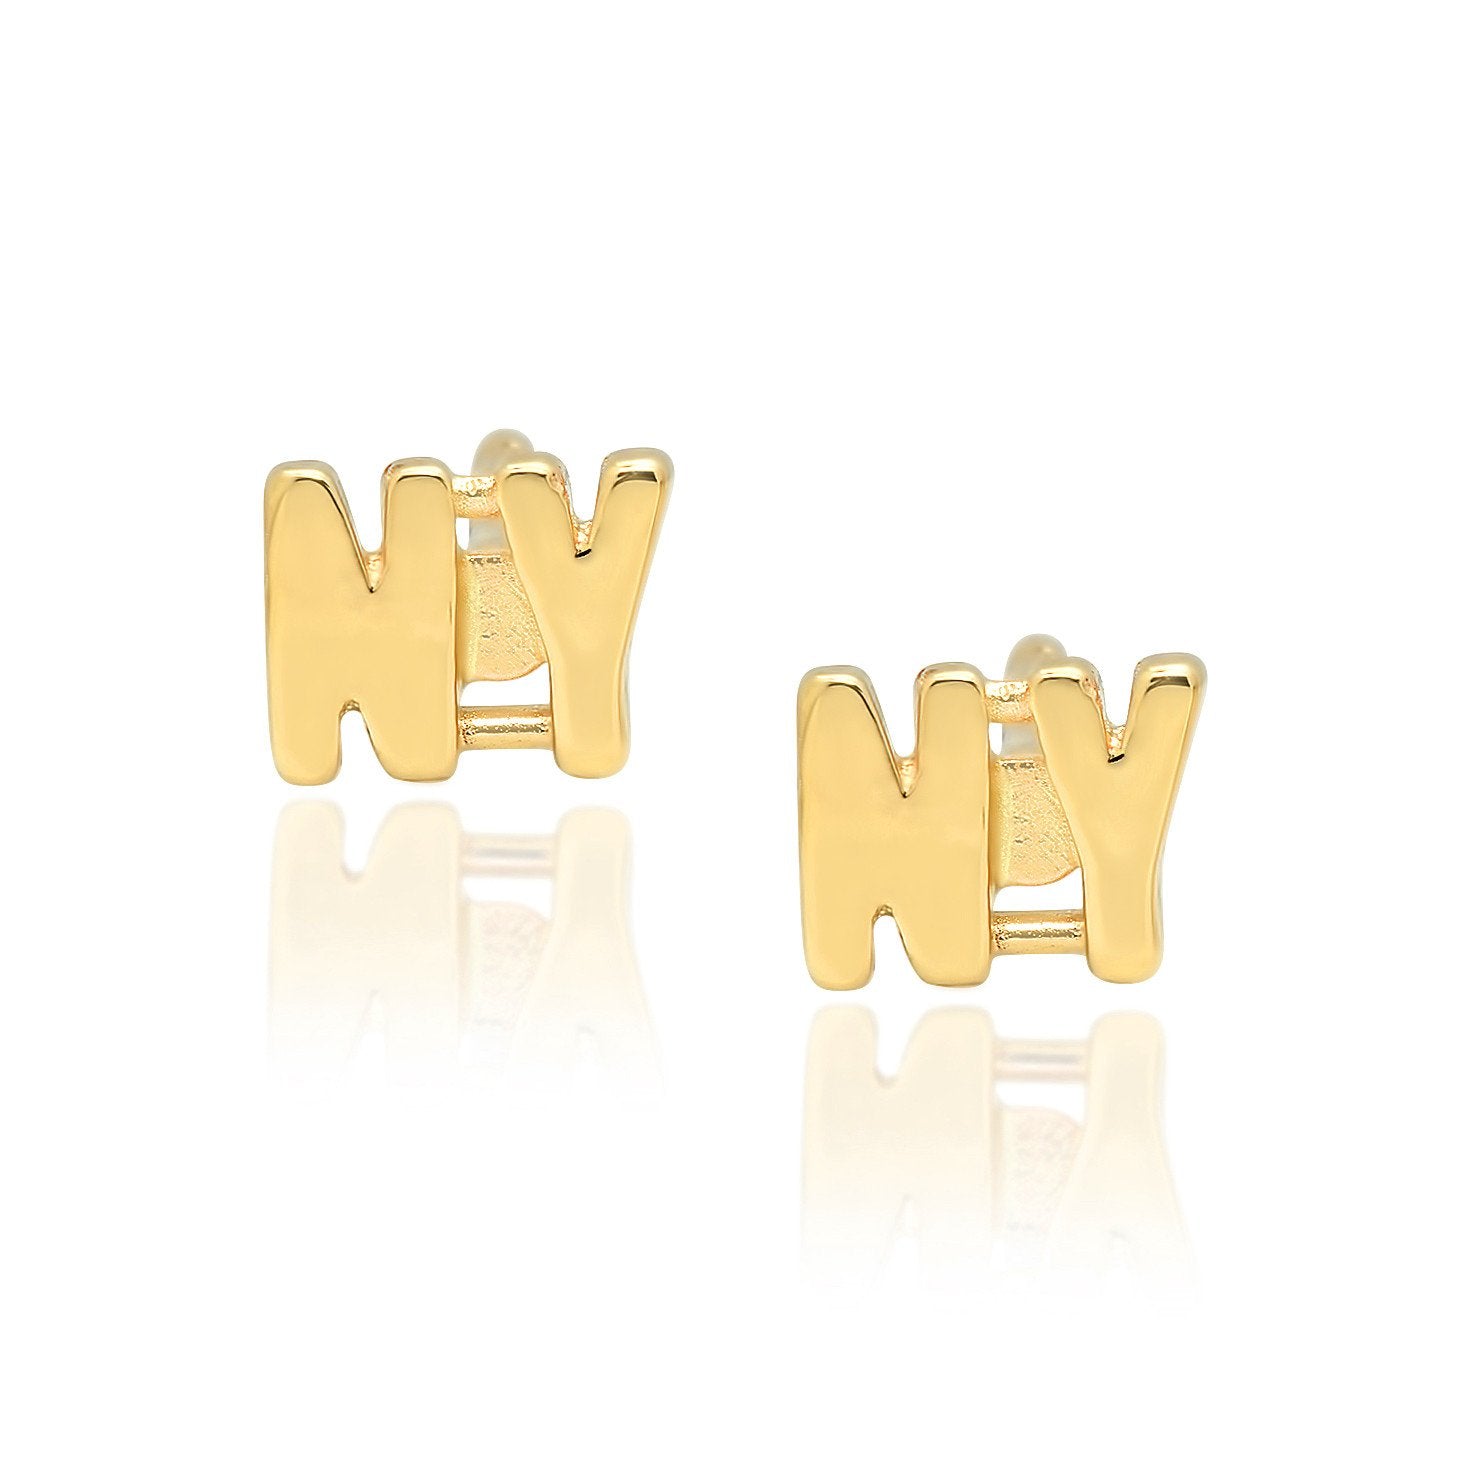 "NY" Stud Earrings (single)